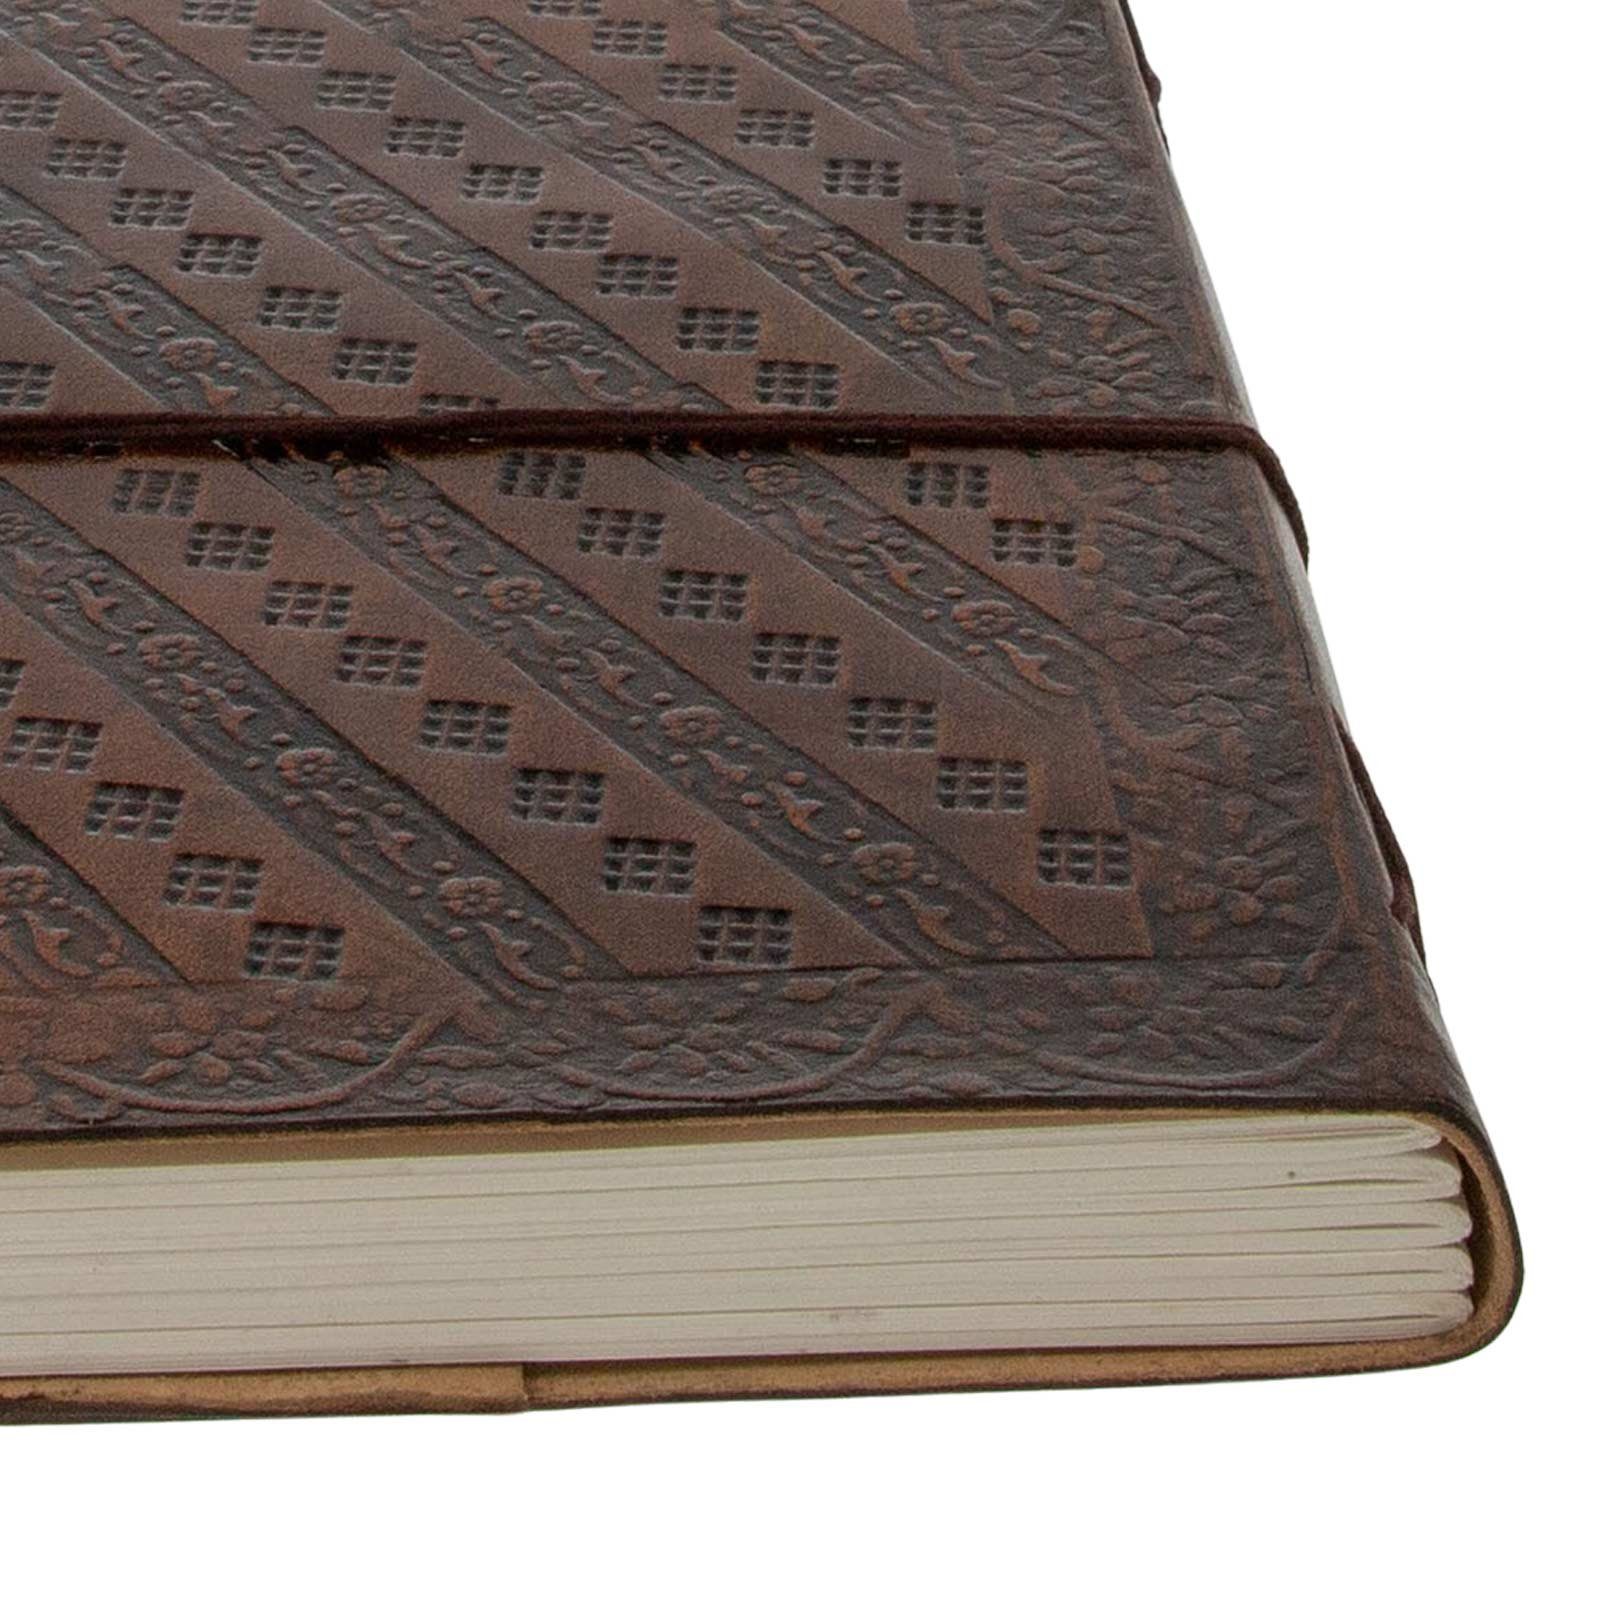 Tagebuch Lord MAGIE UND Notizbuch 11,5x15cm Leder Ganesha Tagebuch handgefertigt KUNST